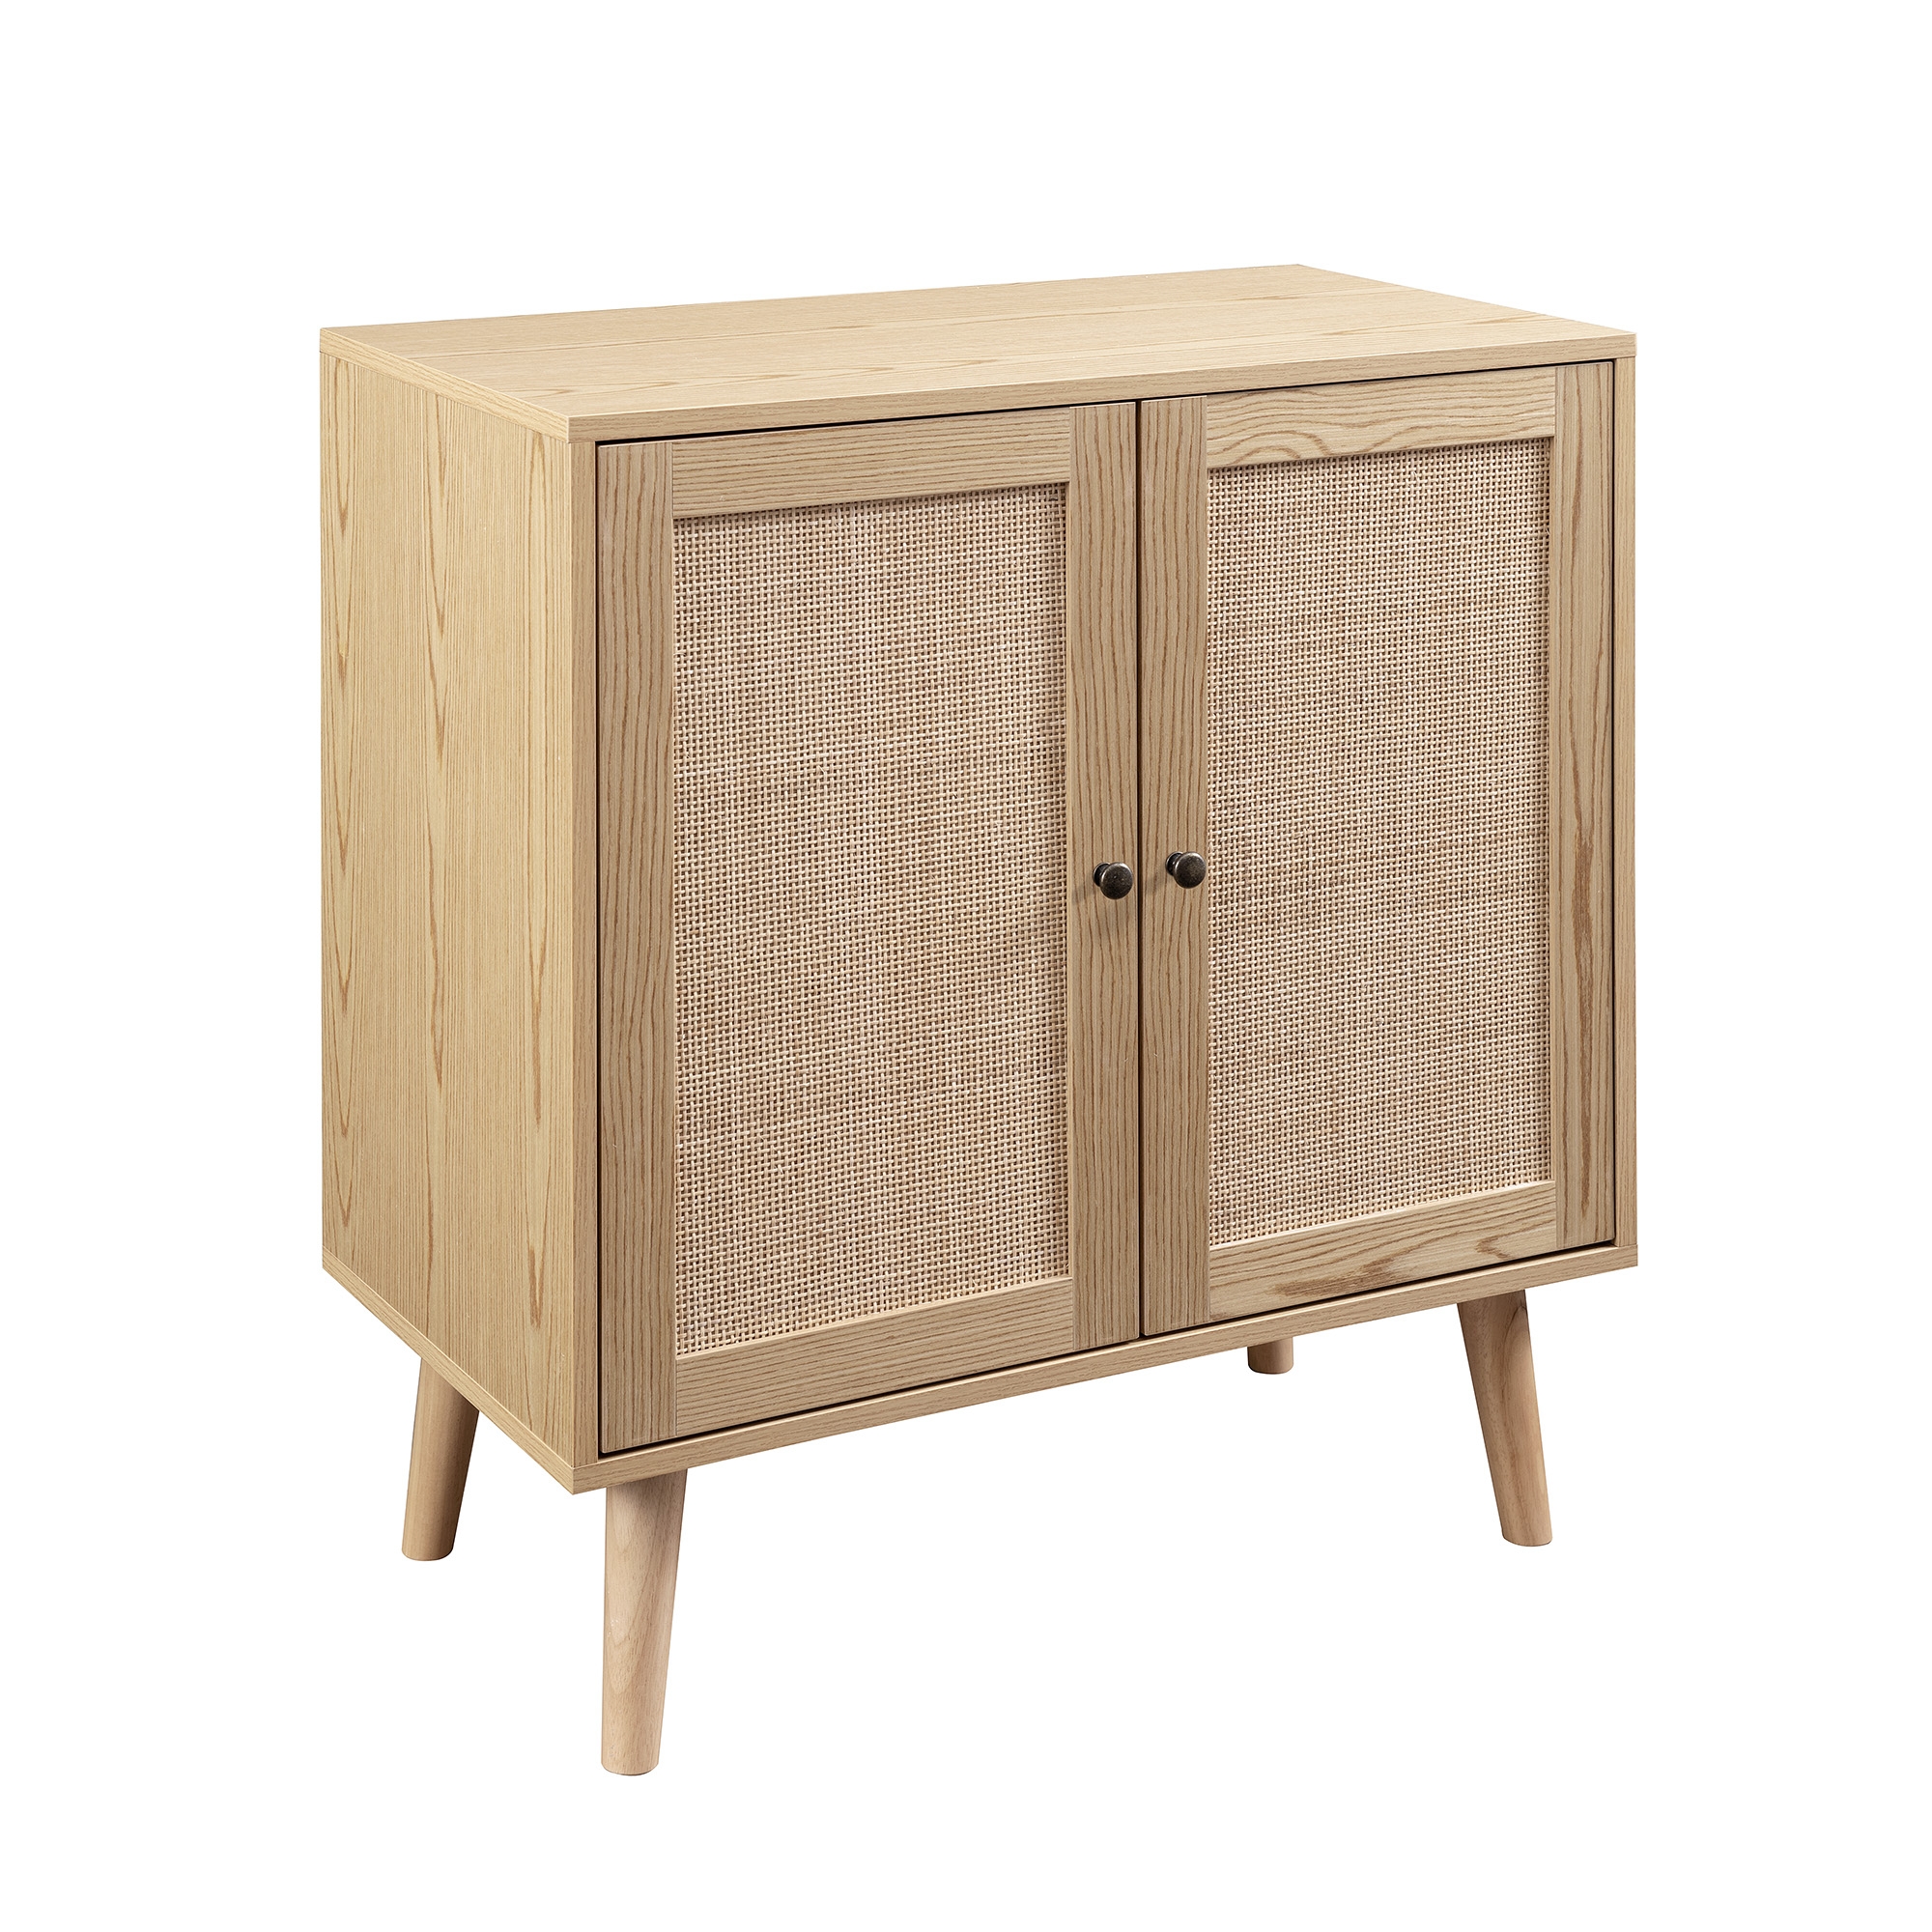 30" Wood and Rattan 2-Door Accent Cabinet - Image 1